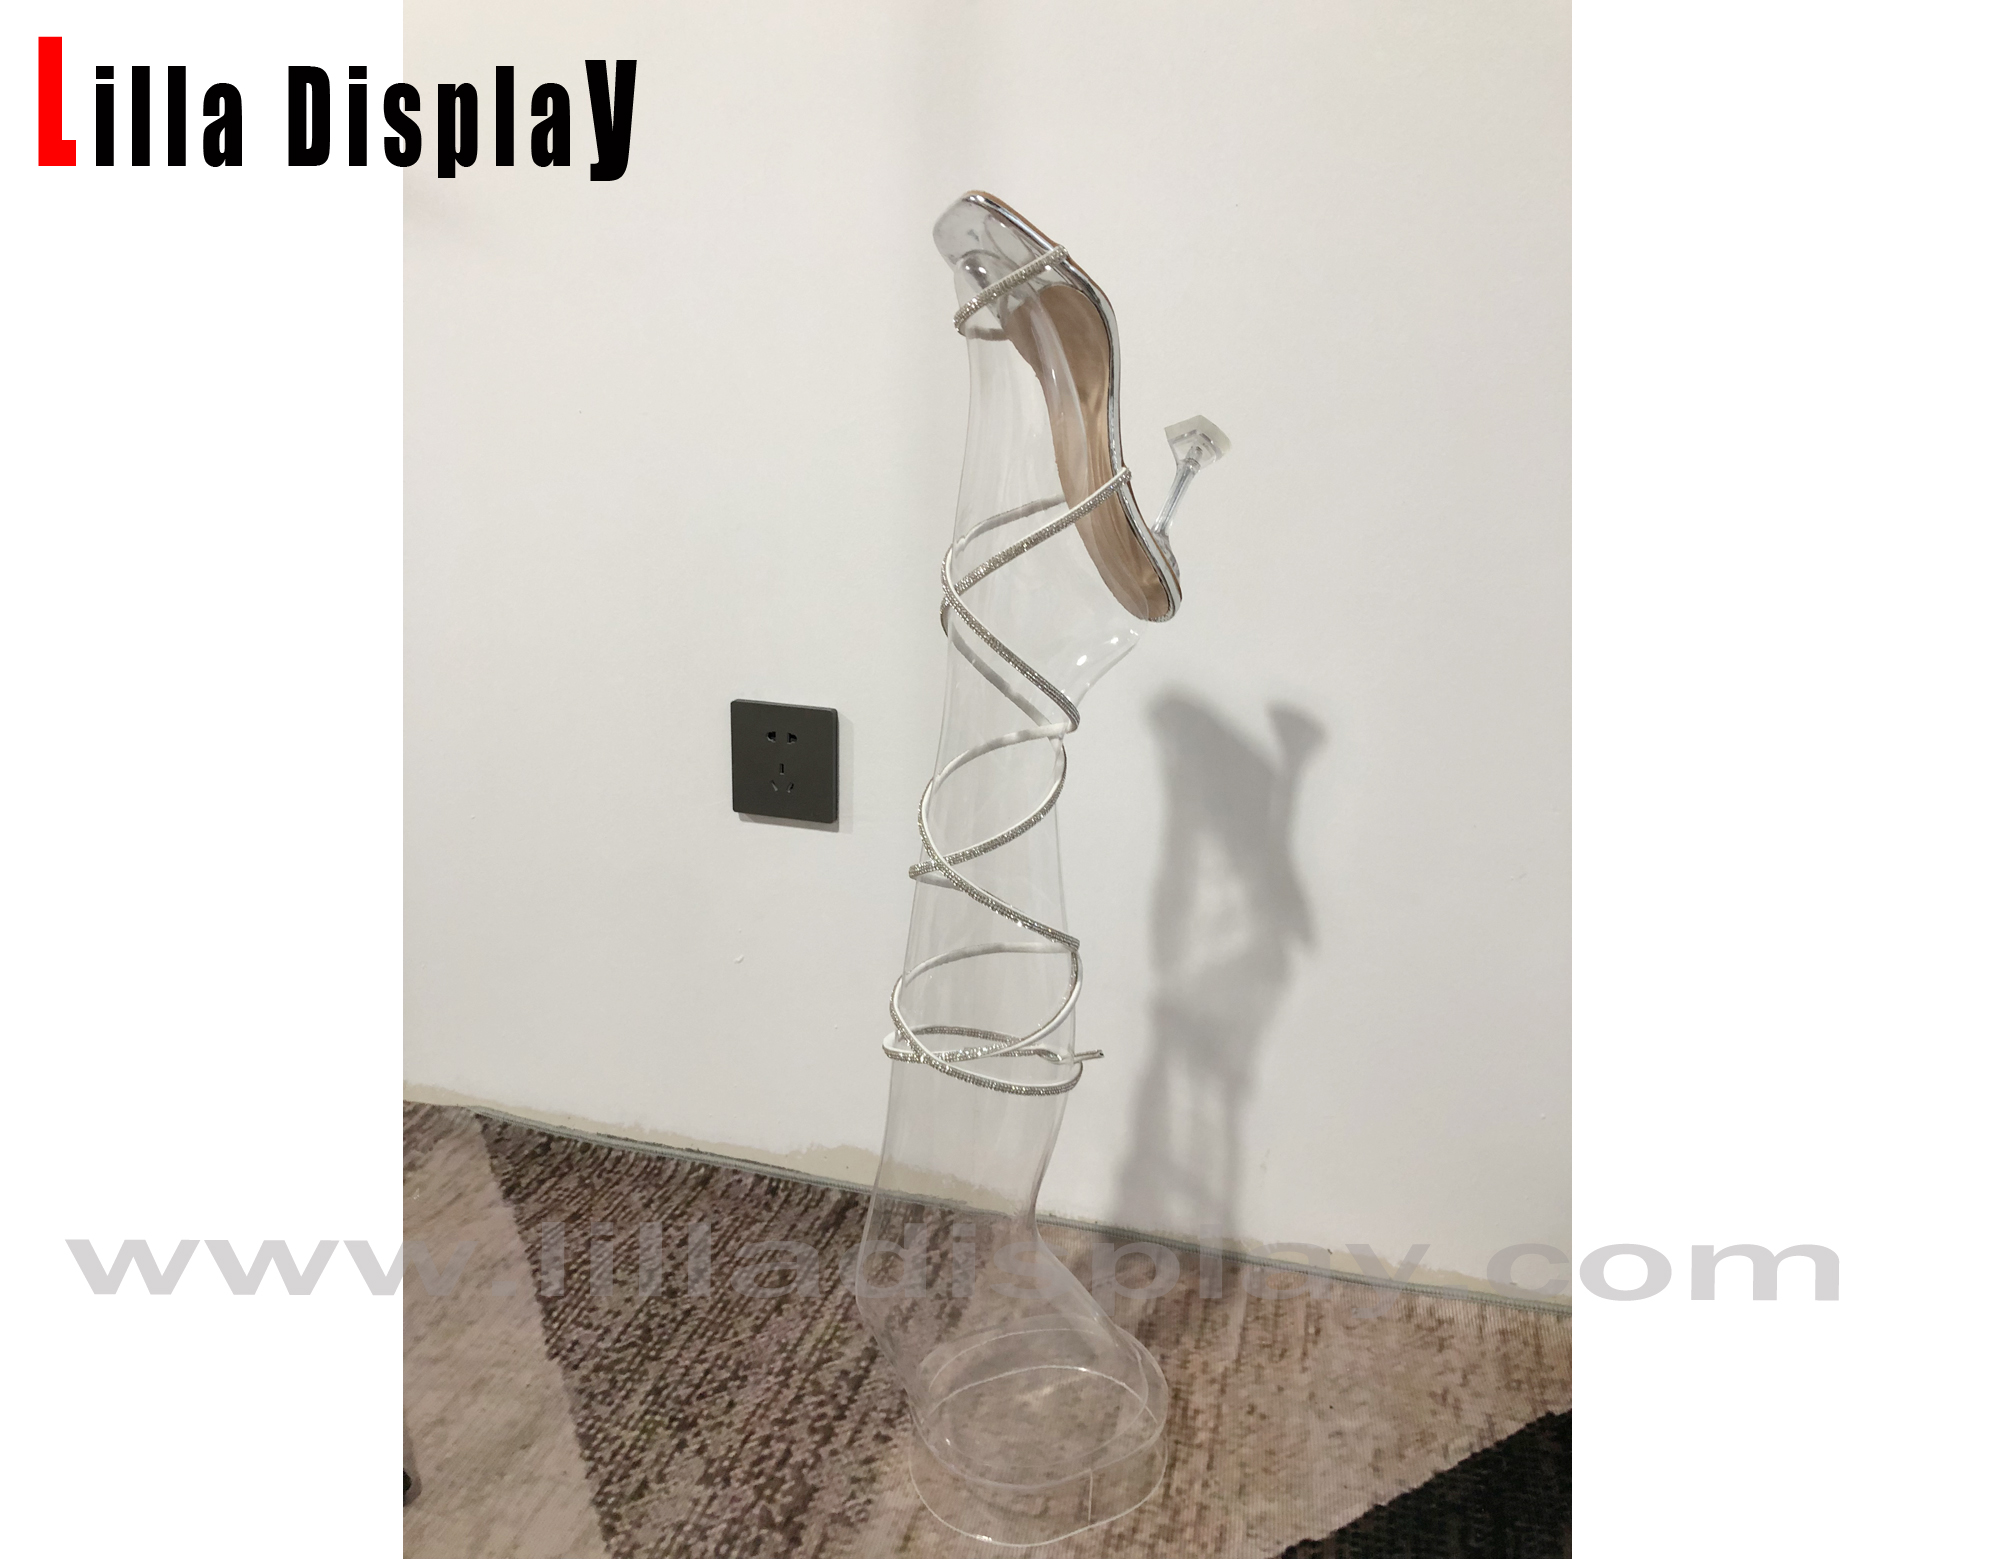 Calzature Romane Bandage Alte ghjinochju Display Clear Plexi Mannequin Foot Form AF09